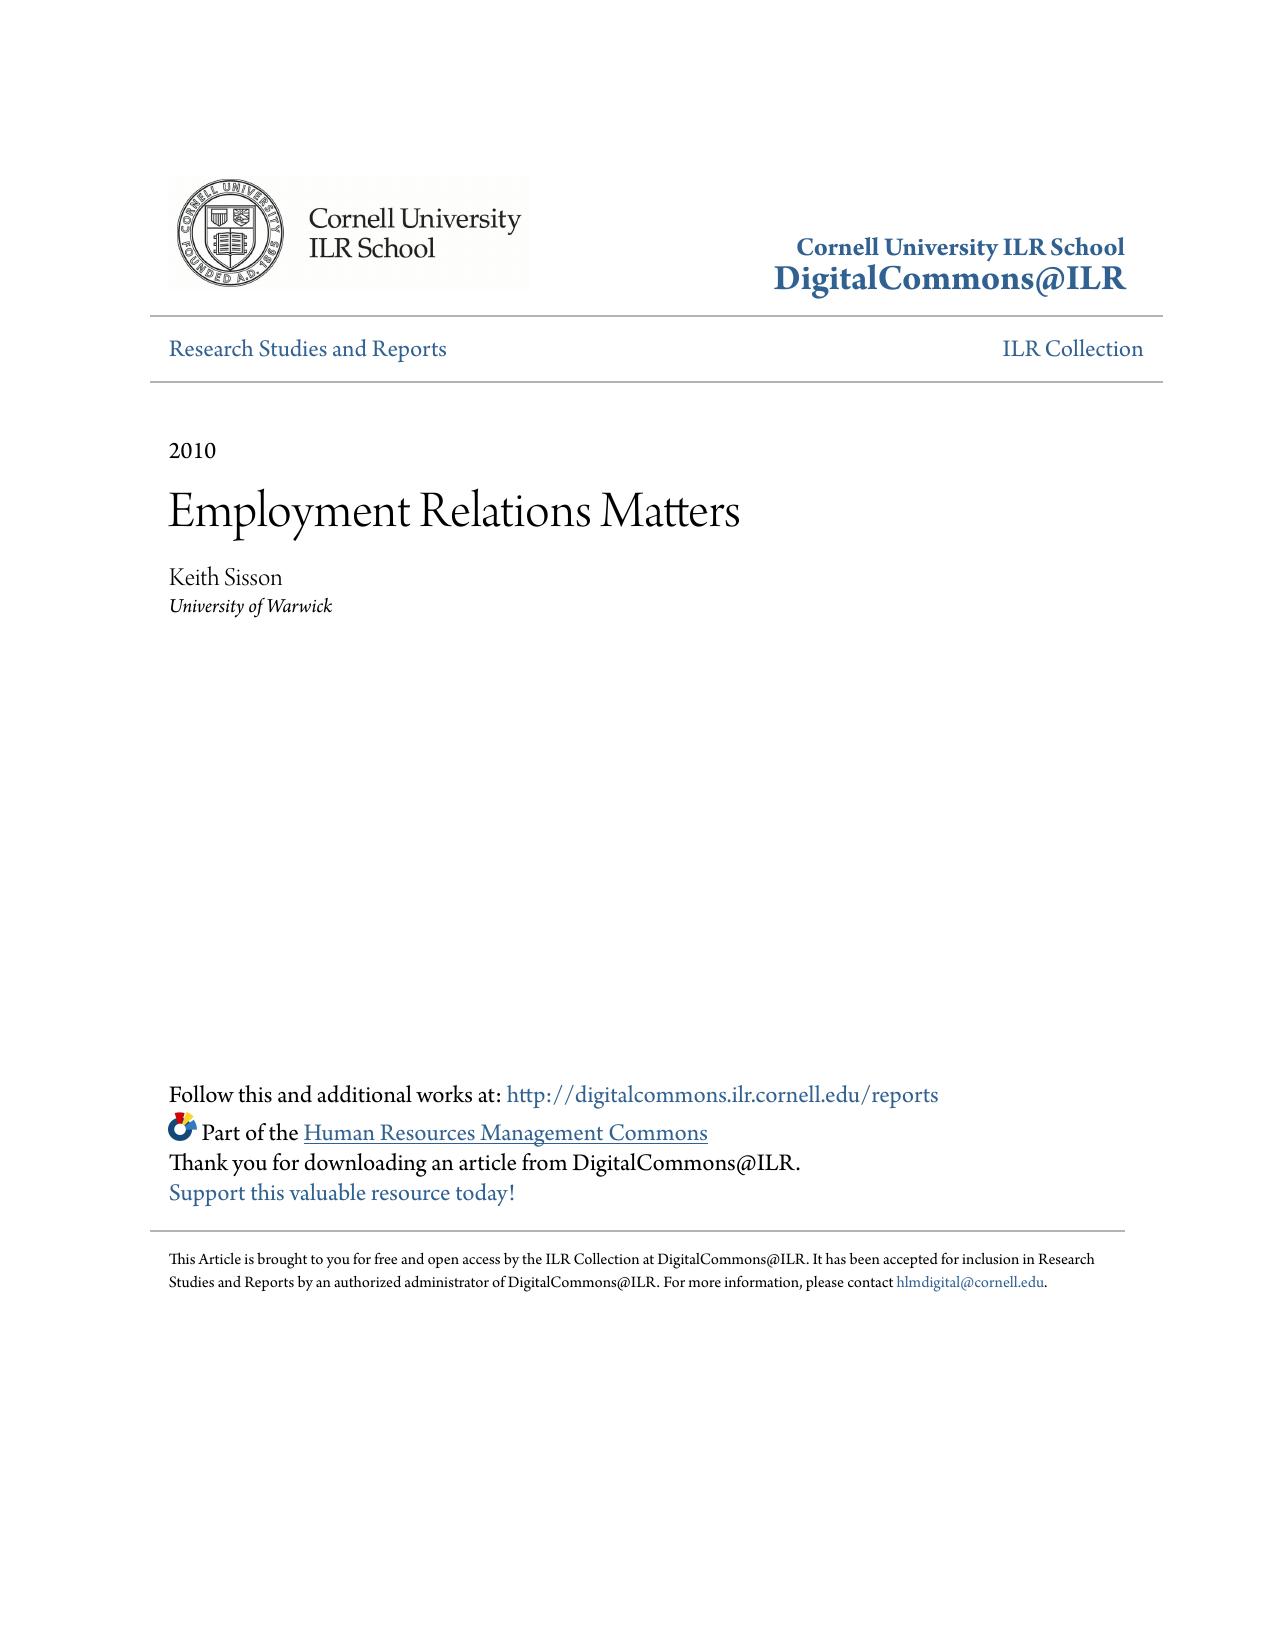 Employment Relations Matters